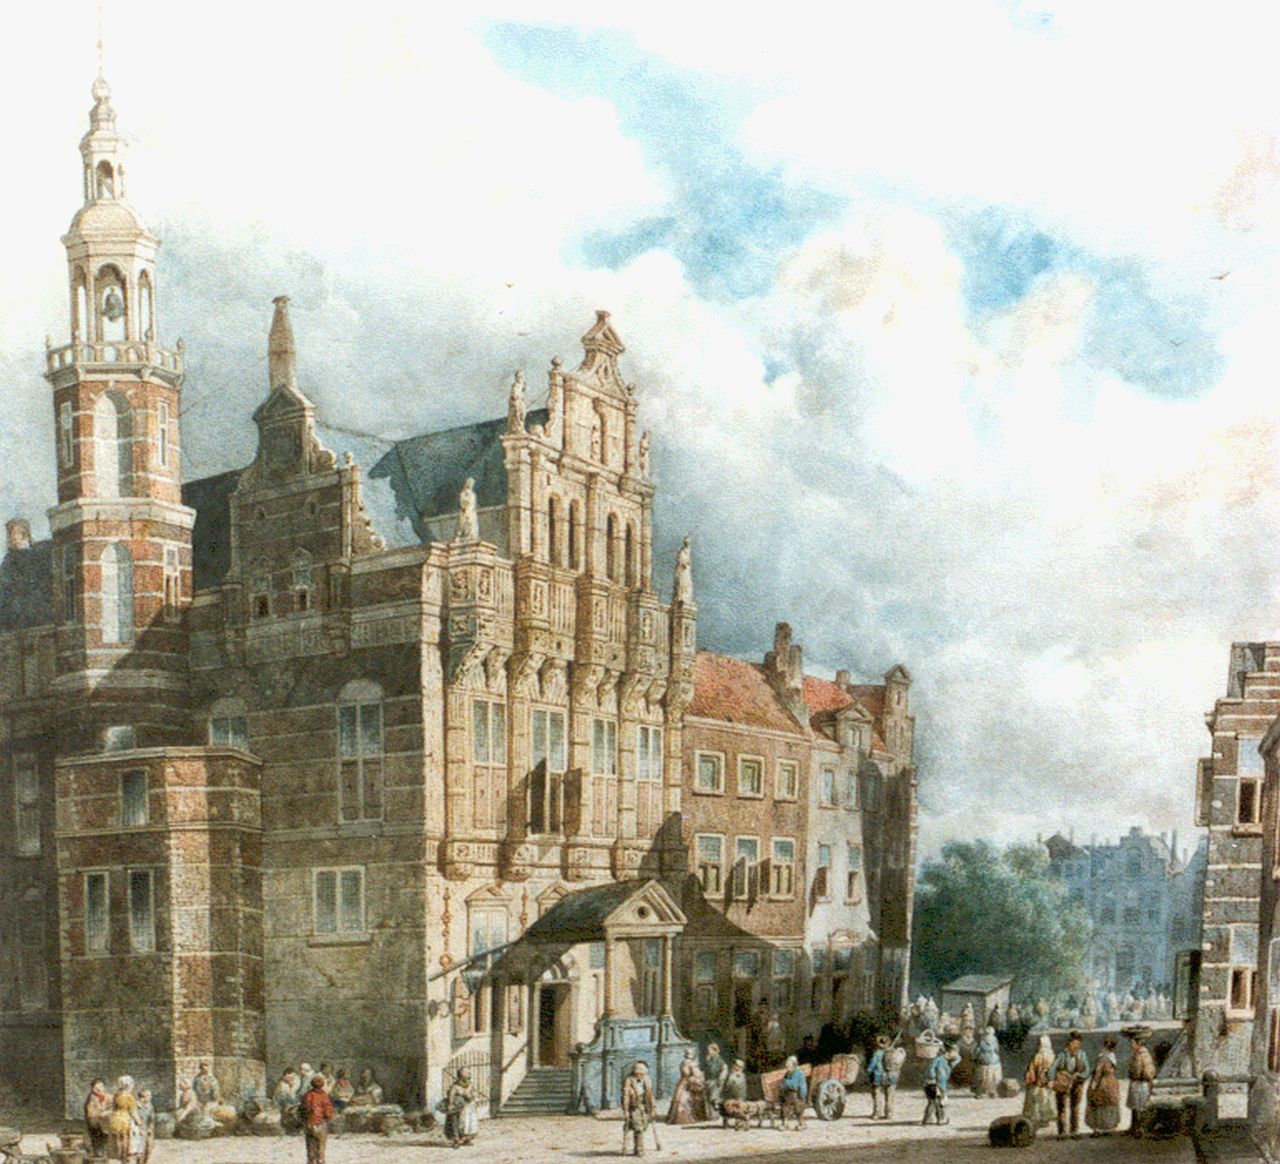 Vrolijk J.A.  | Jacobus 'Adriaan' Vrolijk, Figures on a village square, The Hague, Aquarell auf Papier 40,2 x 43,0 cm, signed l.r. und dated 1860